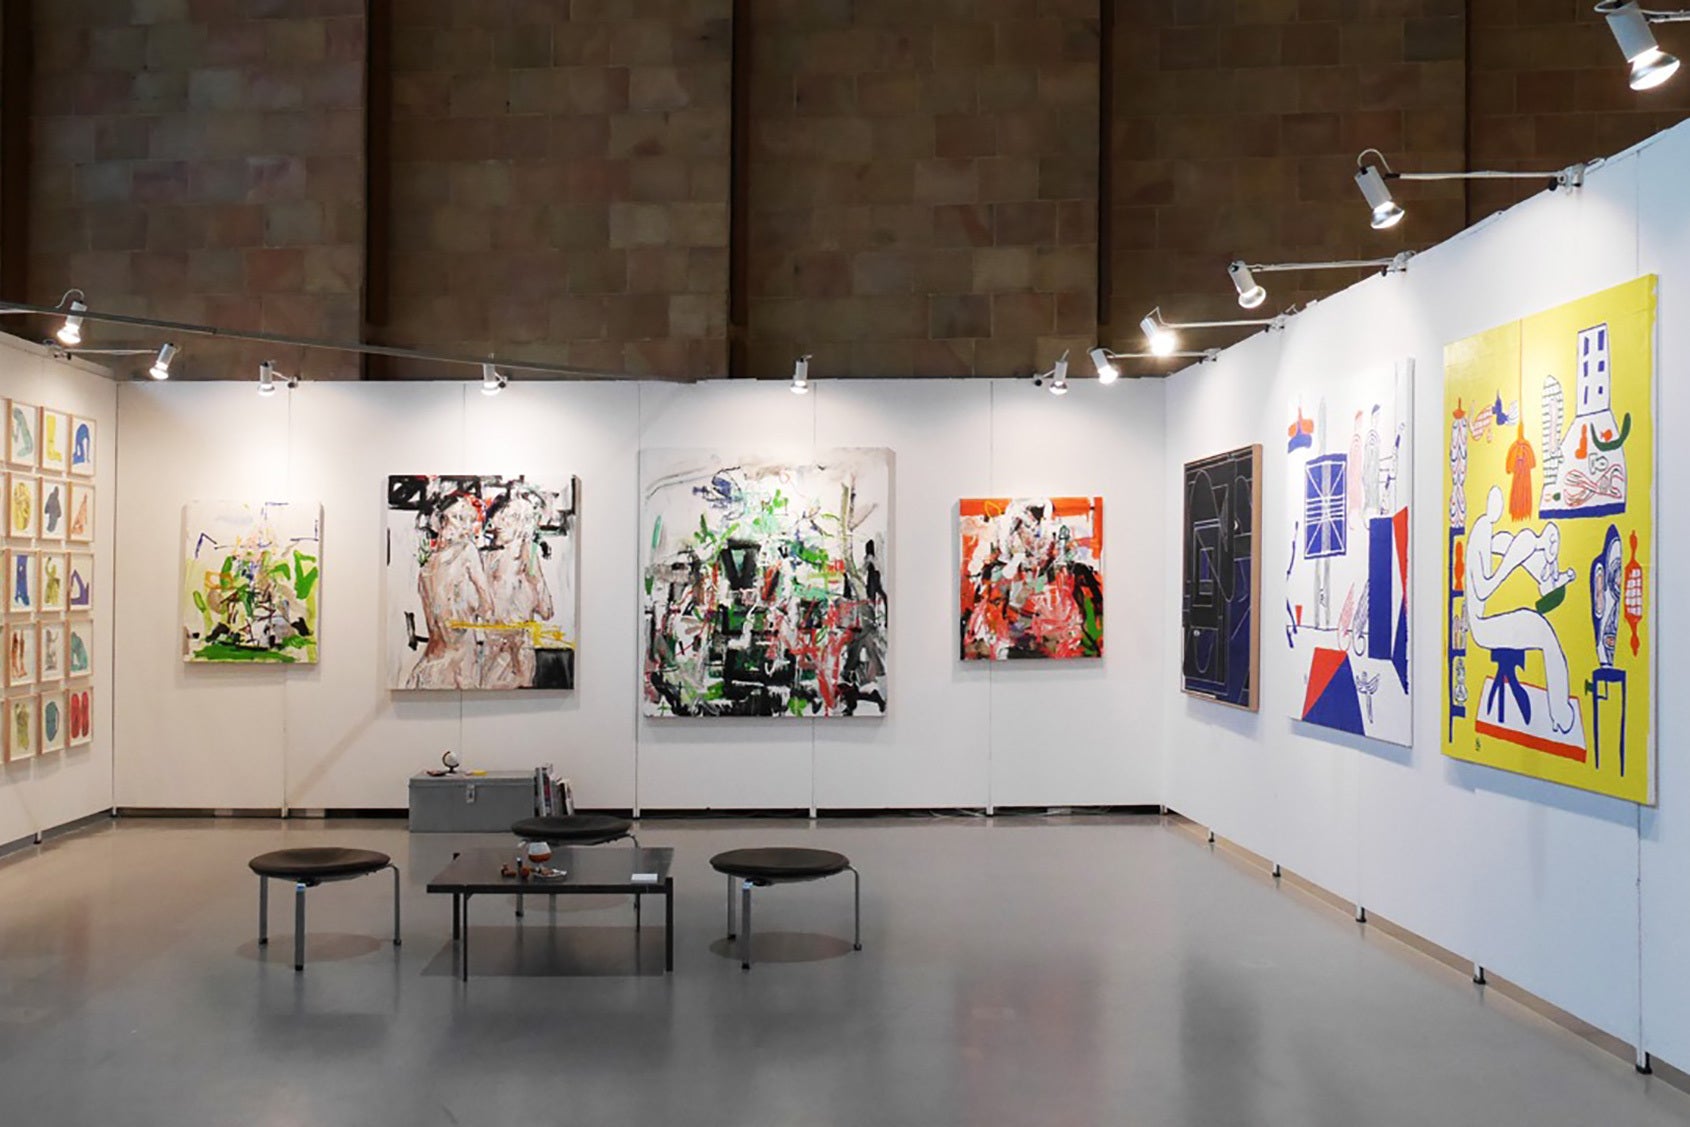 V1 Gallery serves up modern art